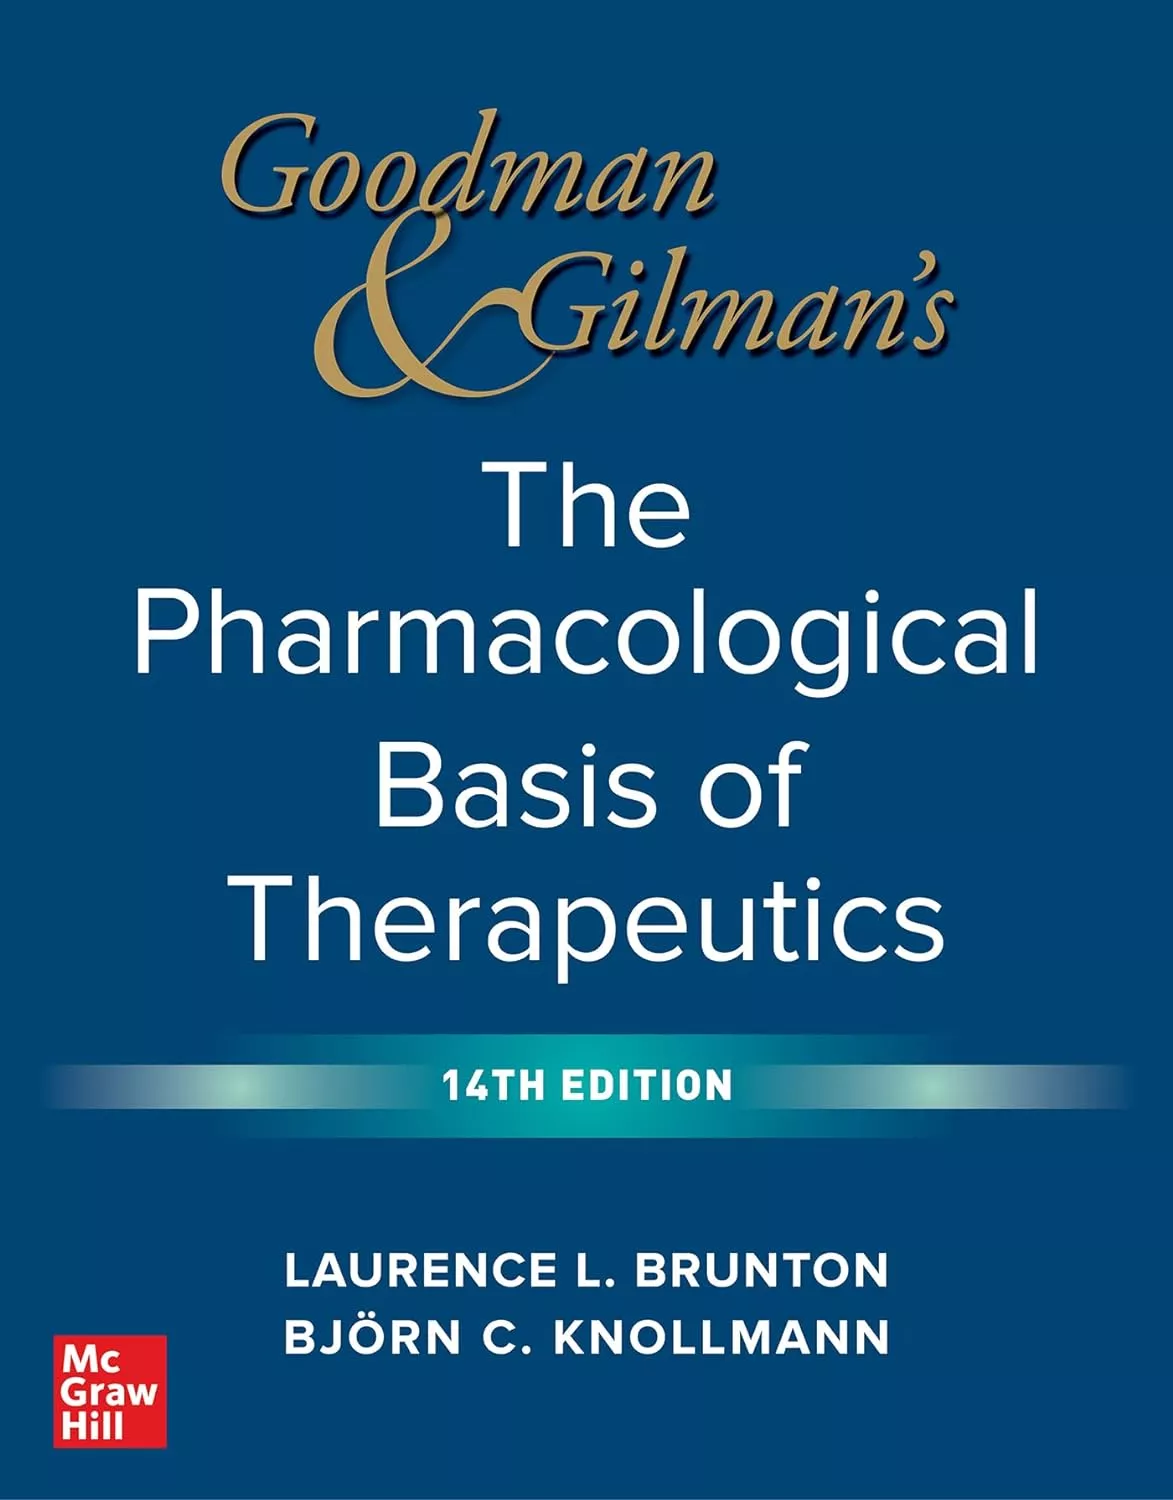 Goodman & Gilman's The pharmacological basis of therapeutics